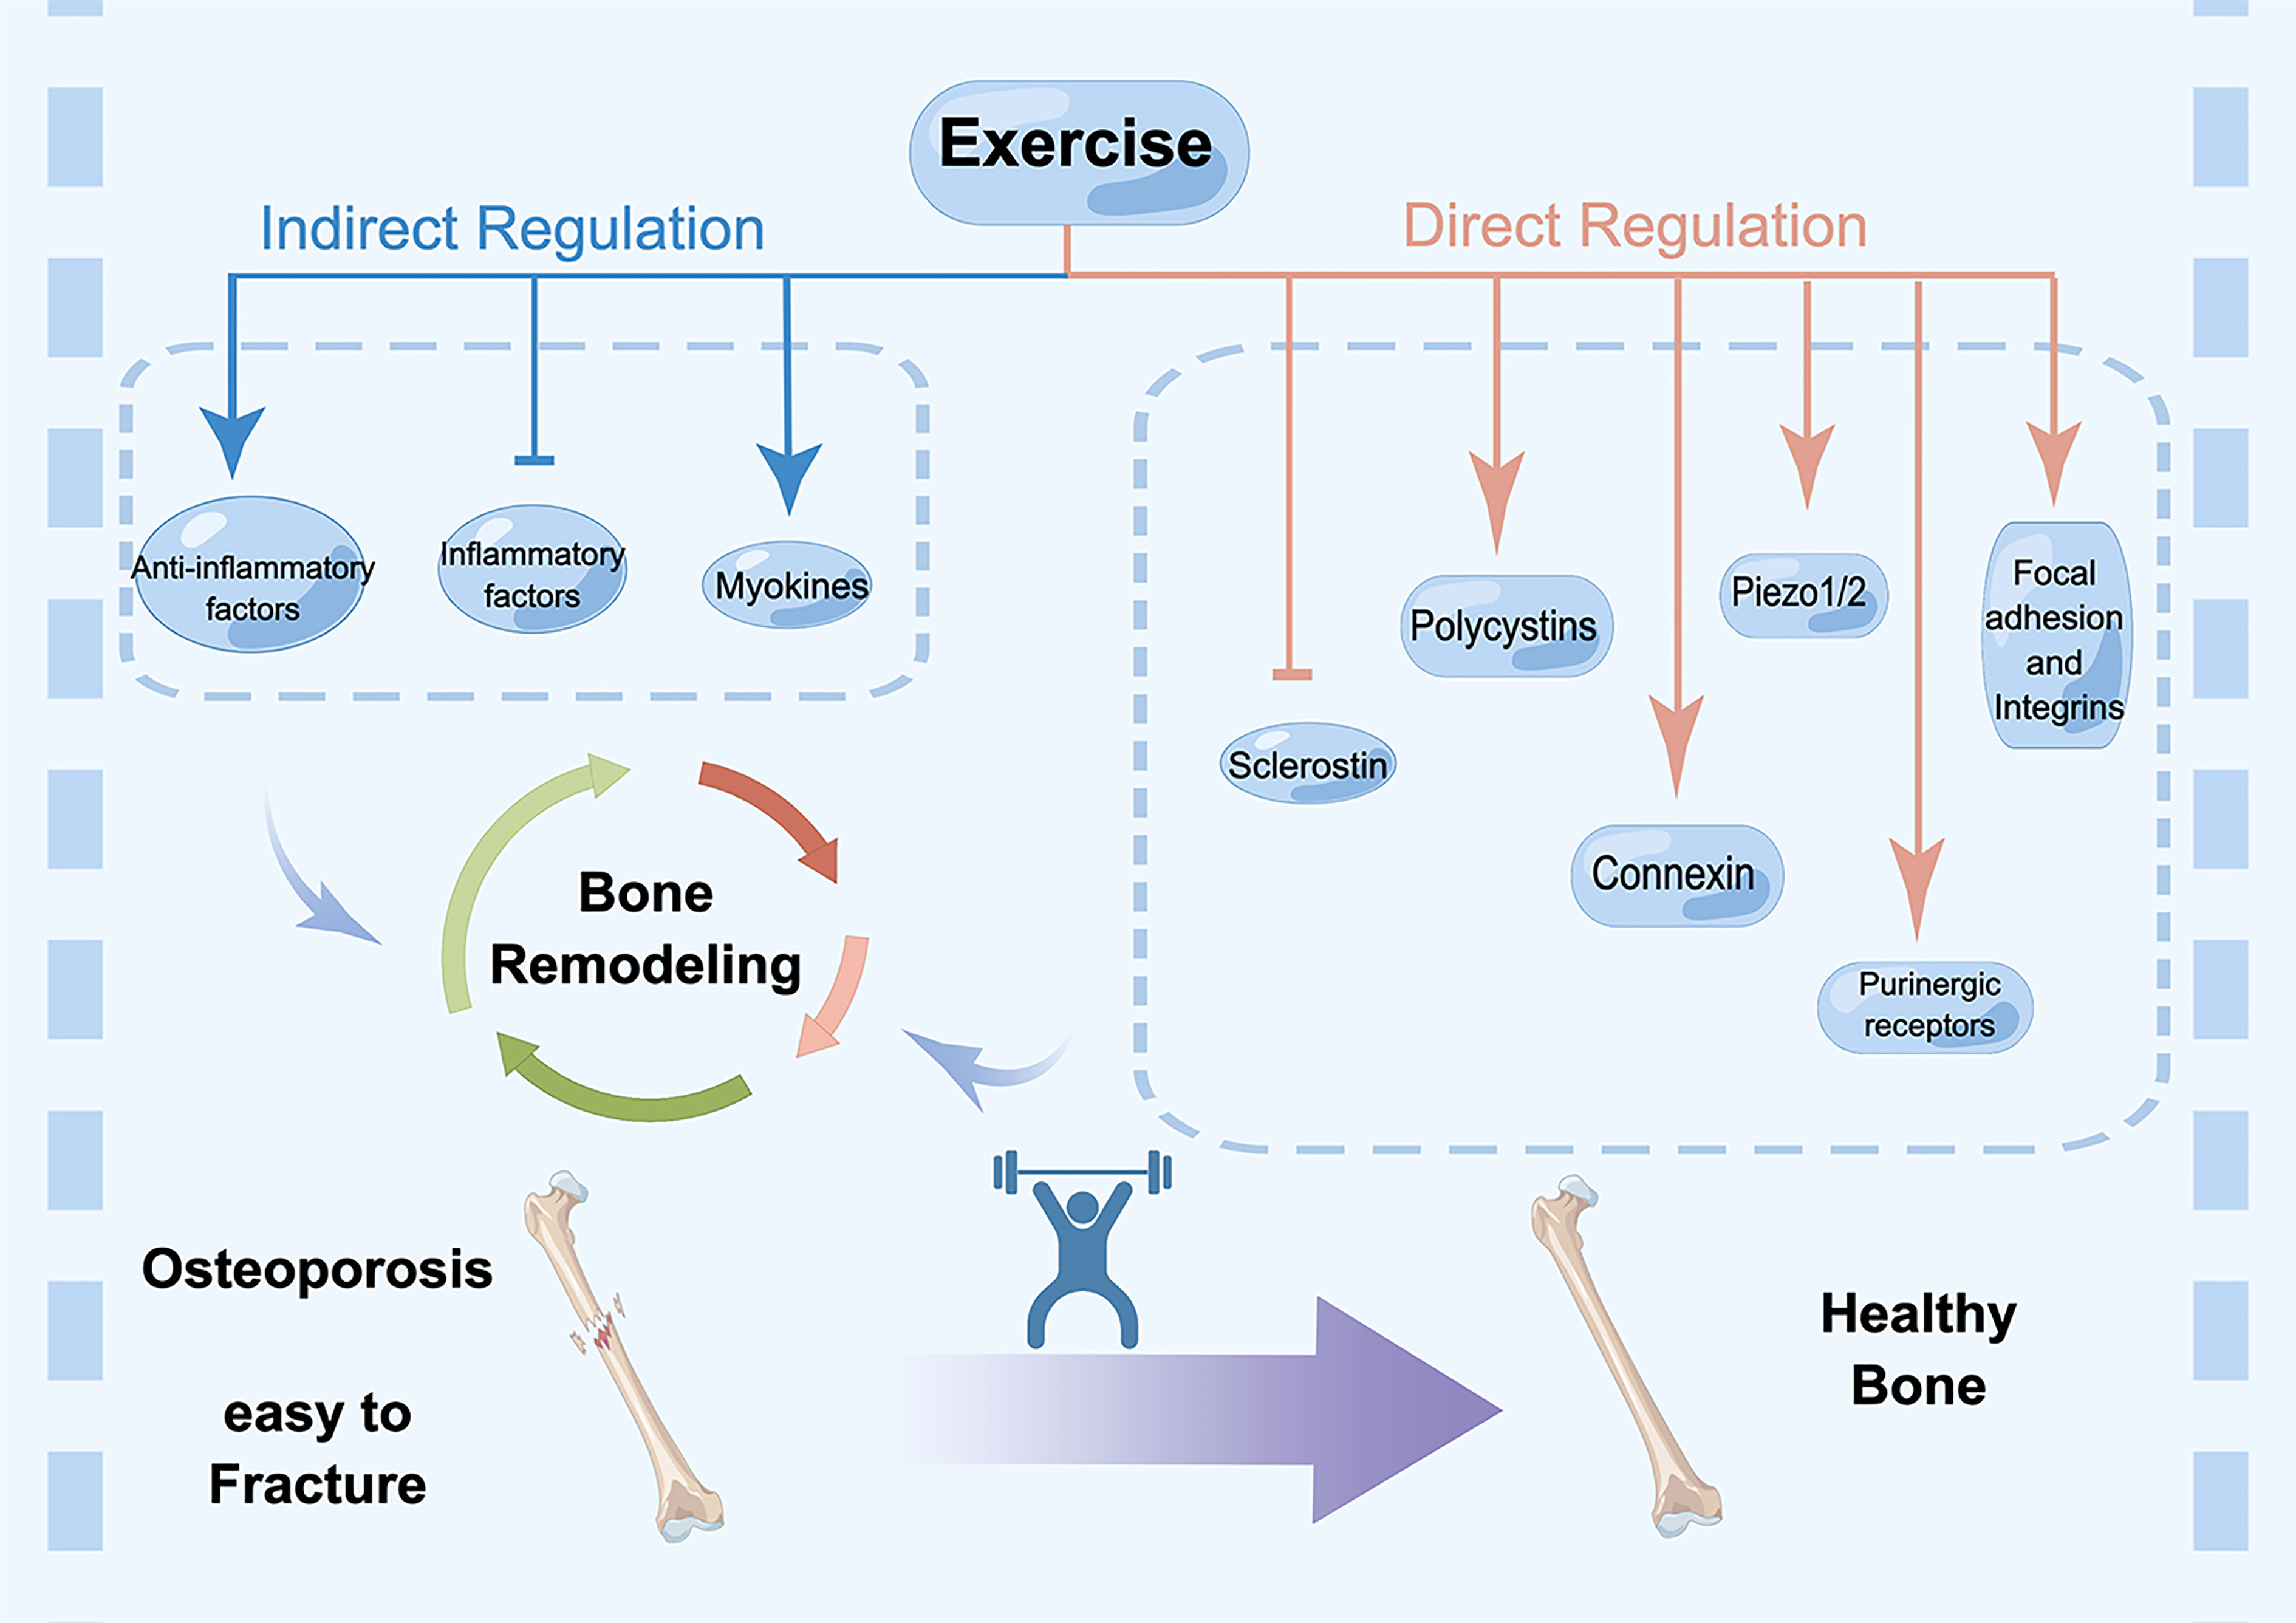 Athlete bone health and recovery protocols